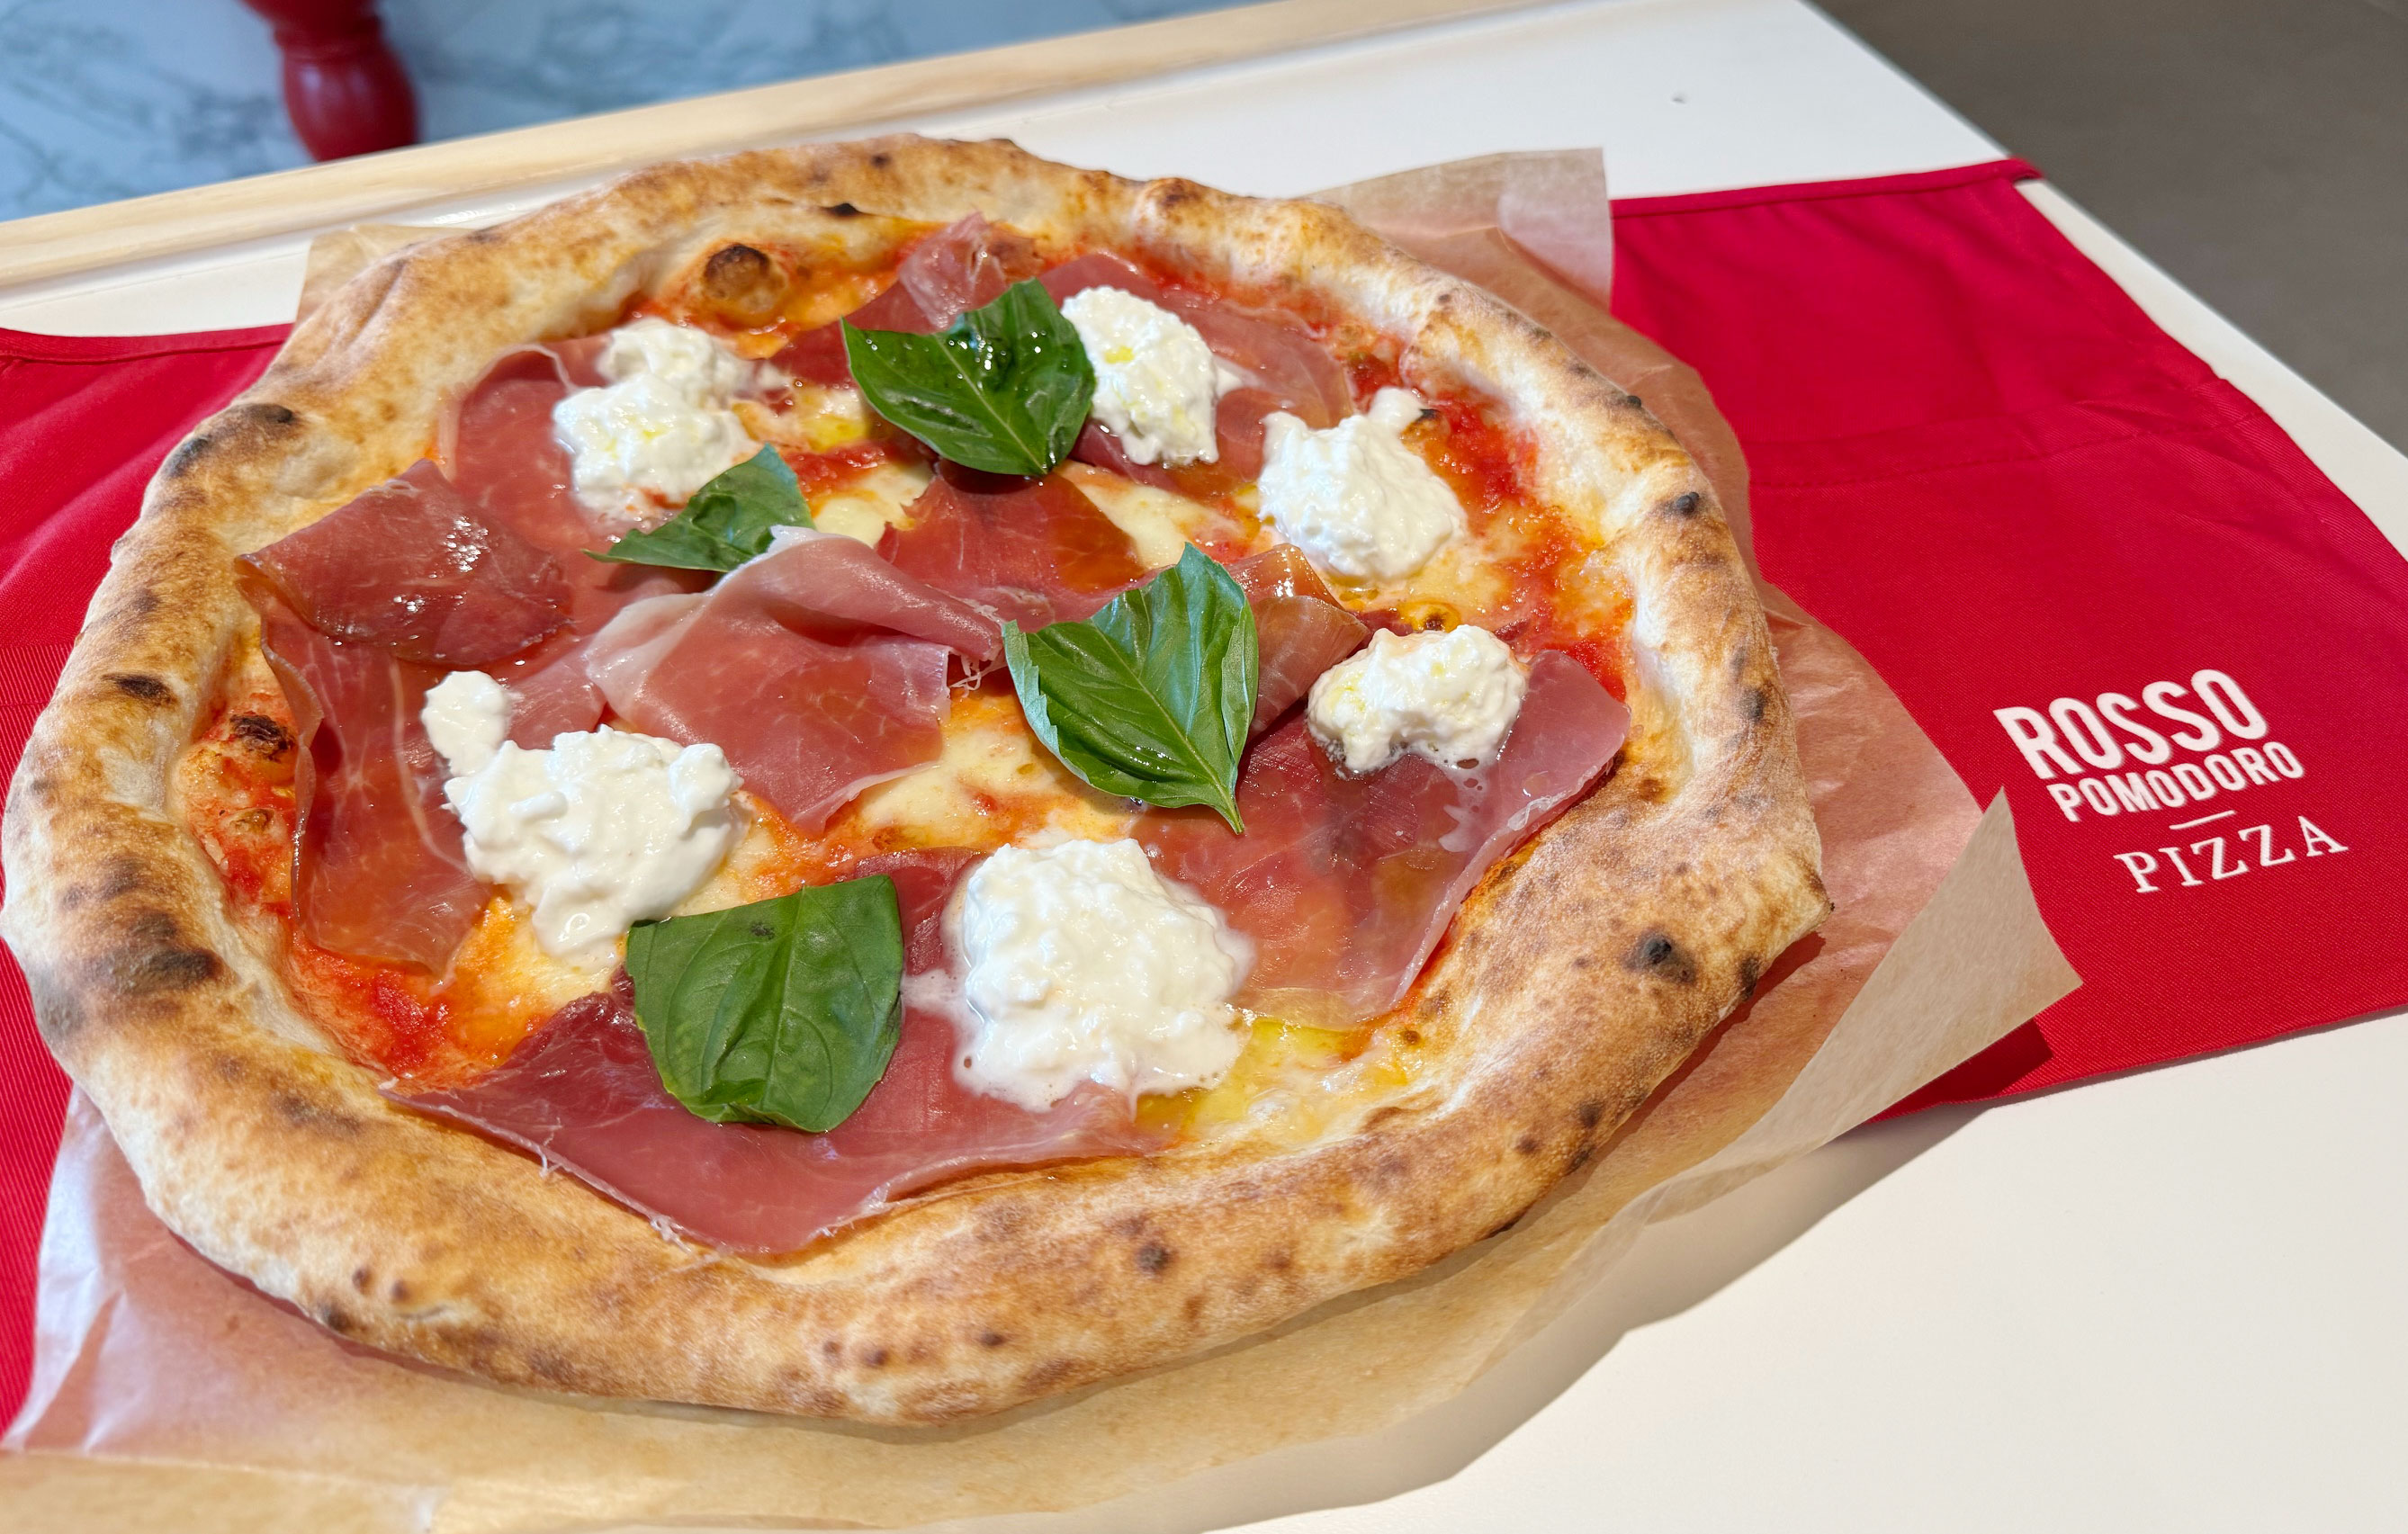 Image shows a Neapolitan style pizza from Rosso Pomodoro with prosciutto and burrata